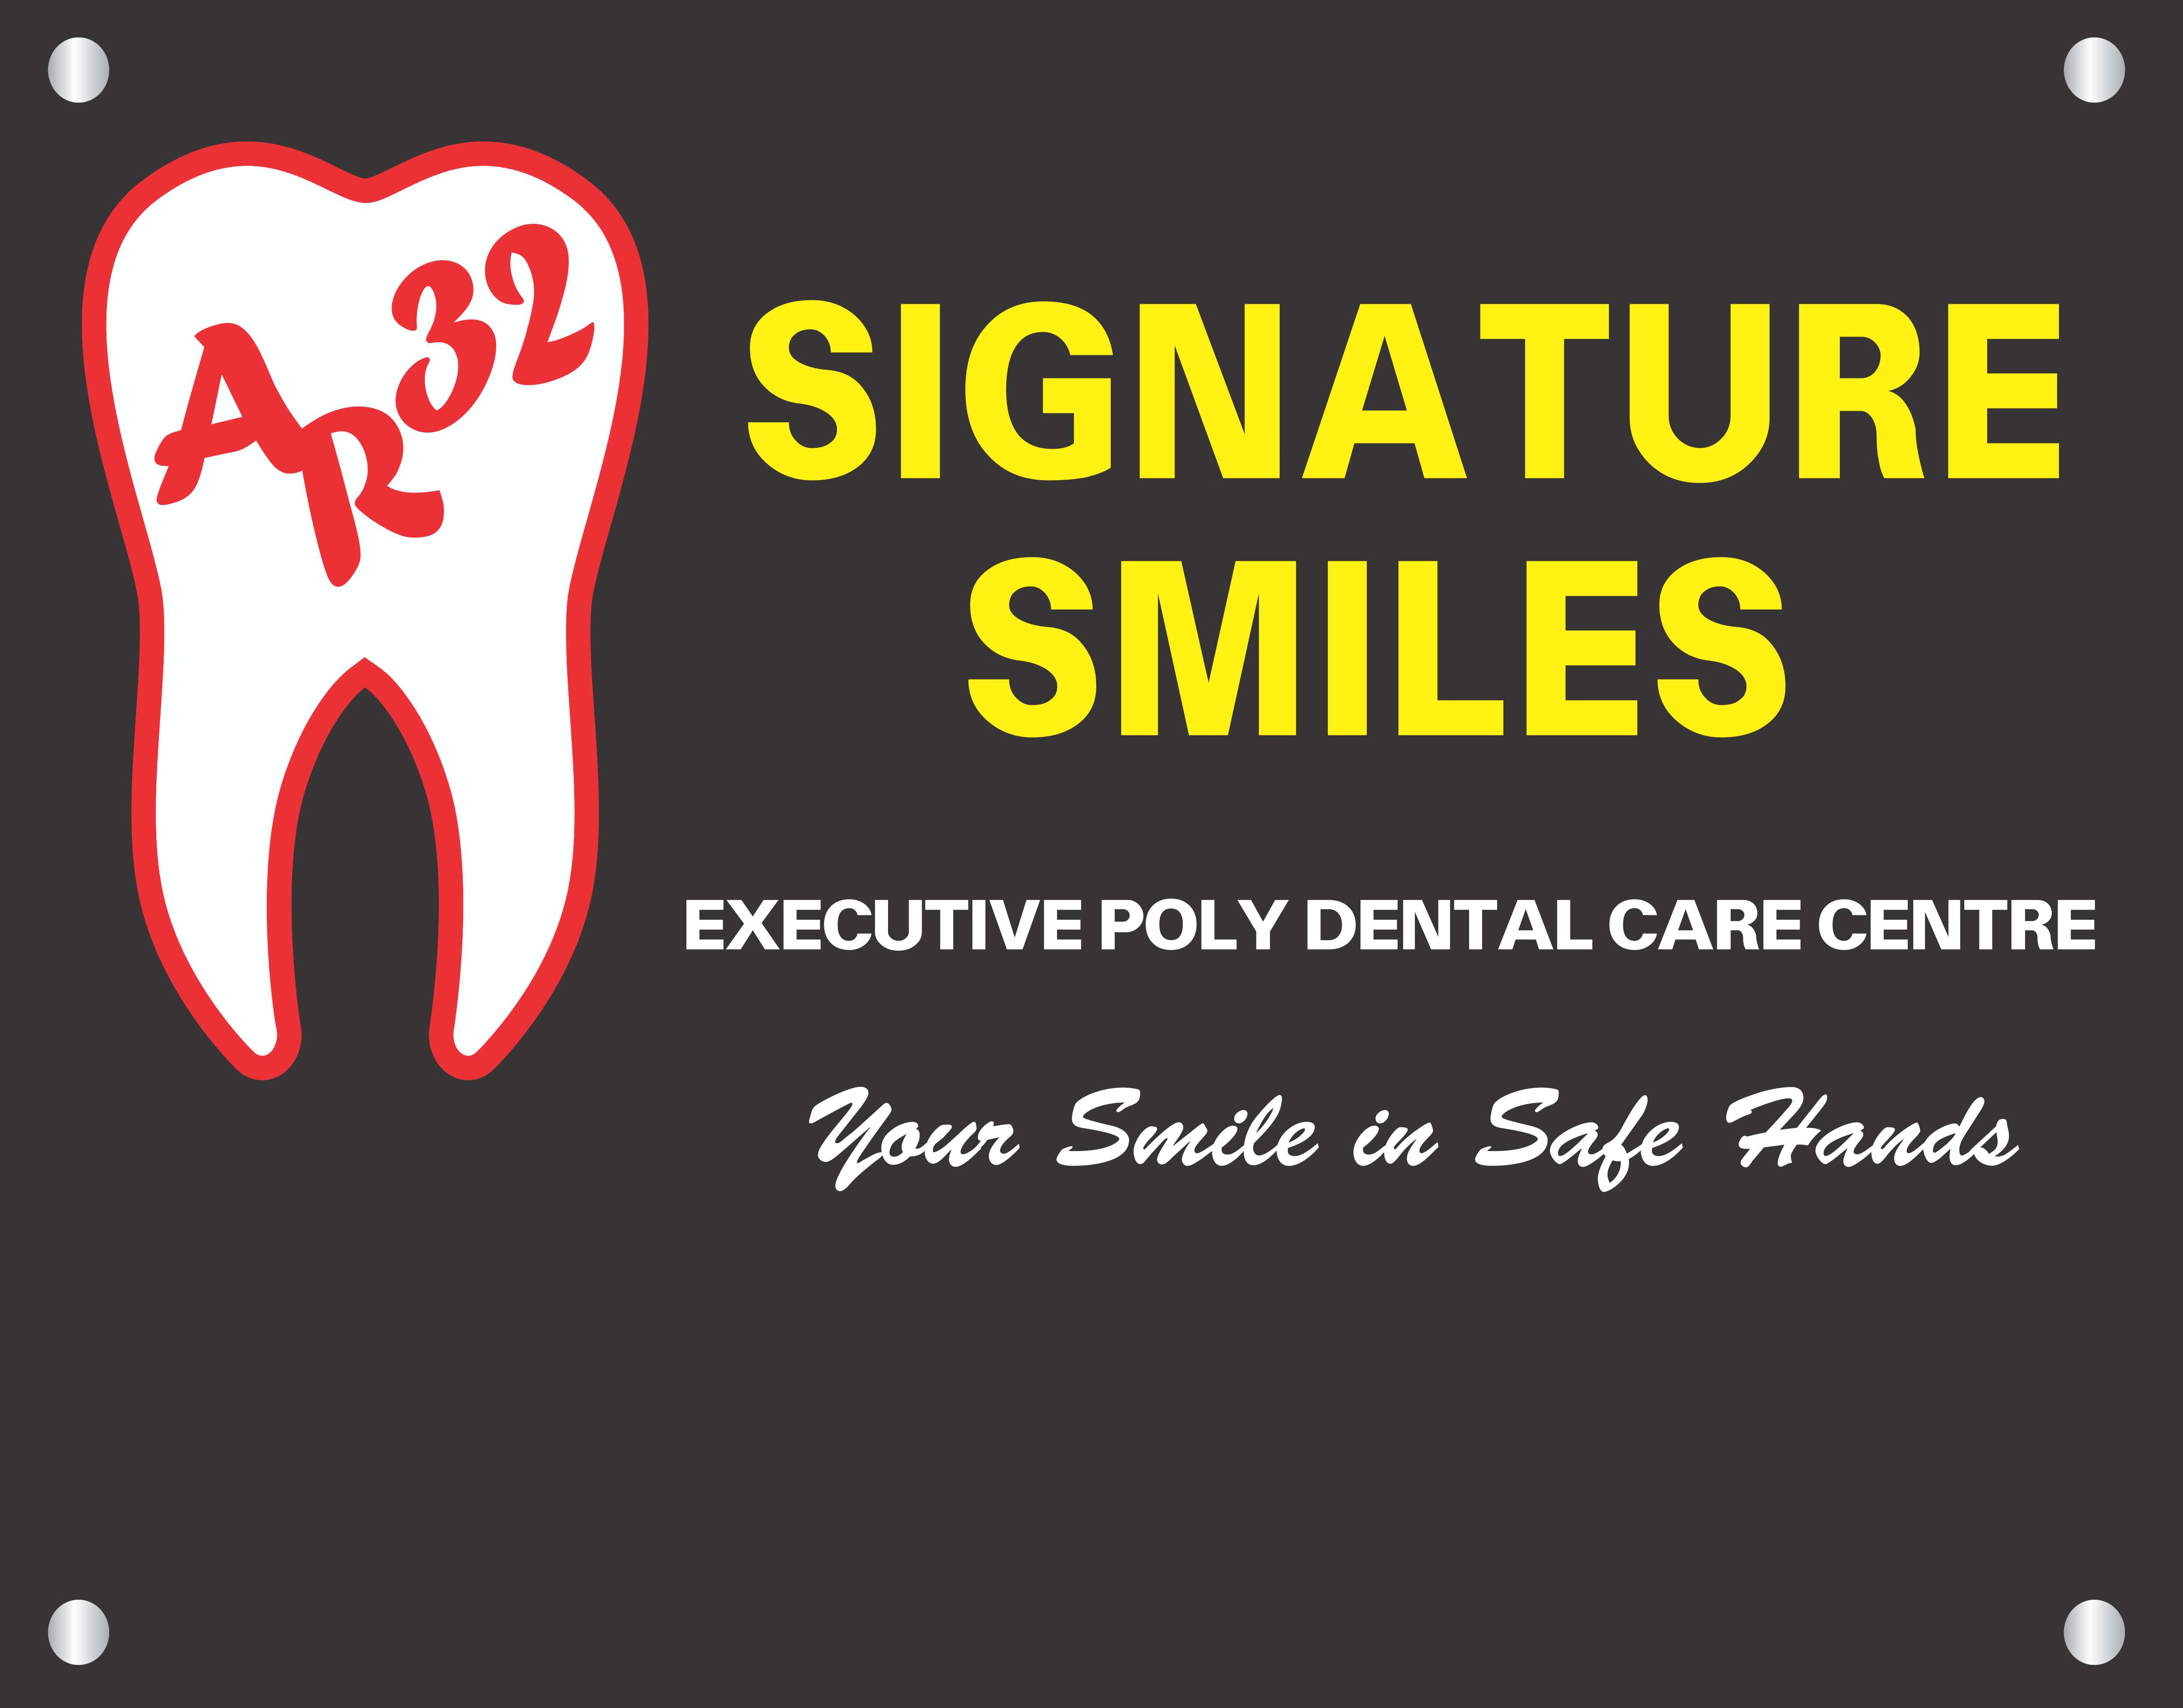 AR 32 Signature Smiles Dental Clinic|Diagnostic centre|Medical Services